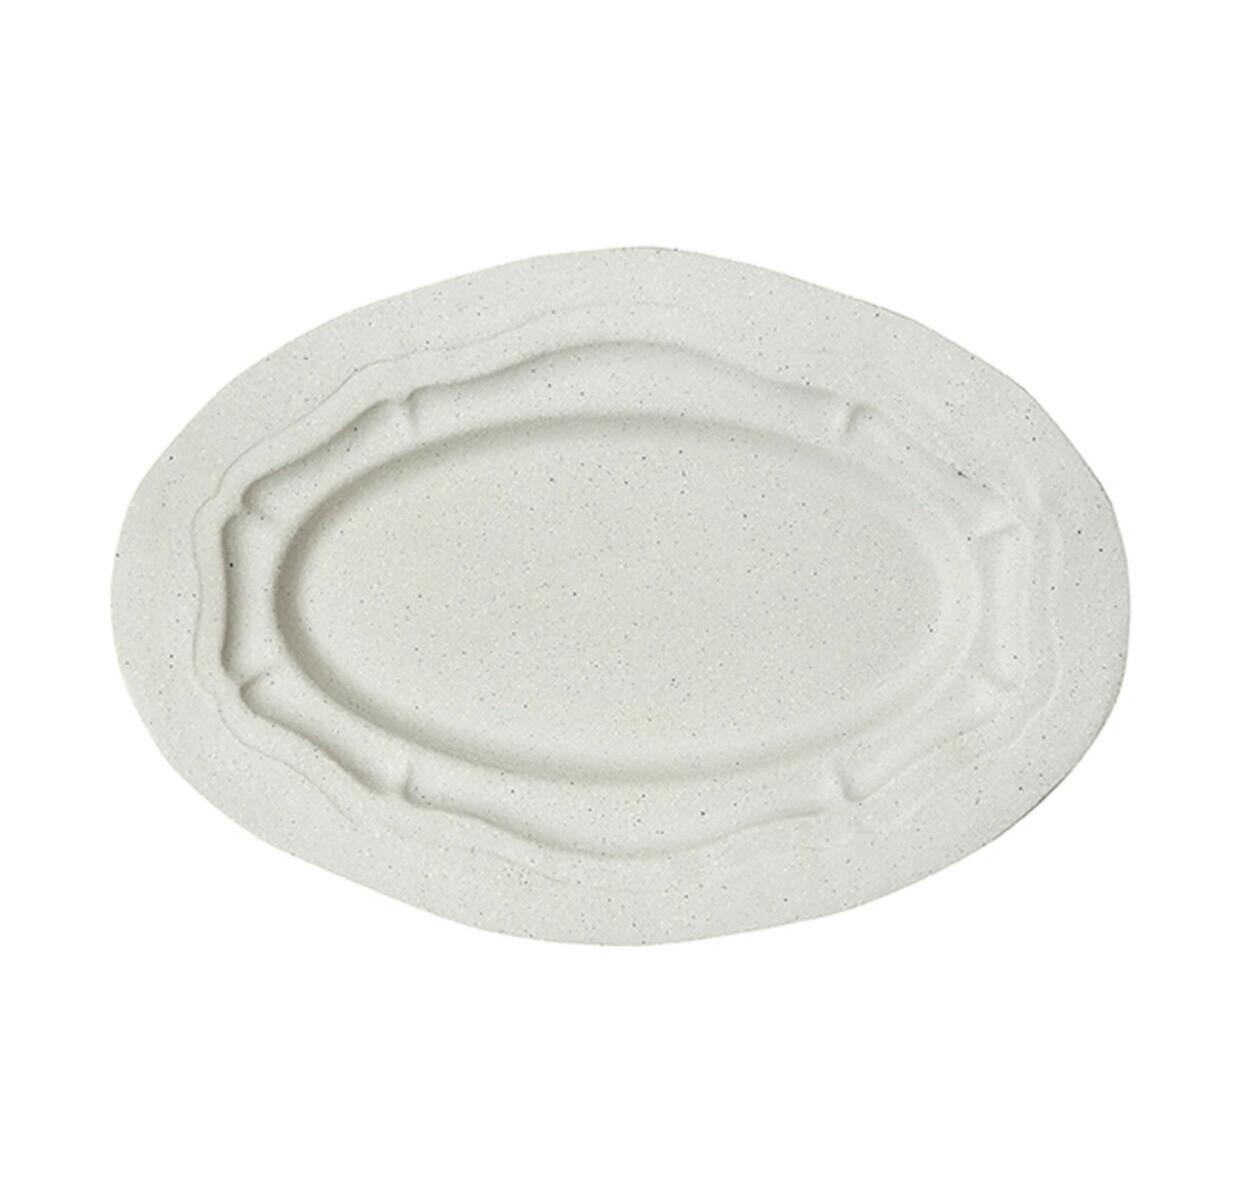 oval dish l refectoire sable mat ceramic manufacturer